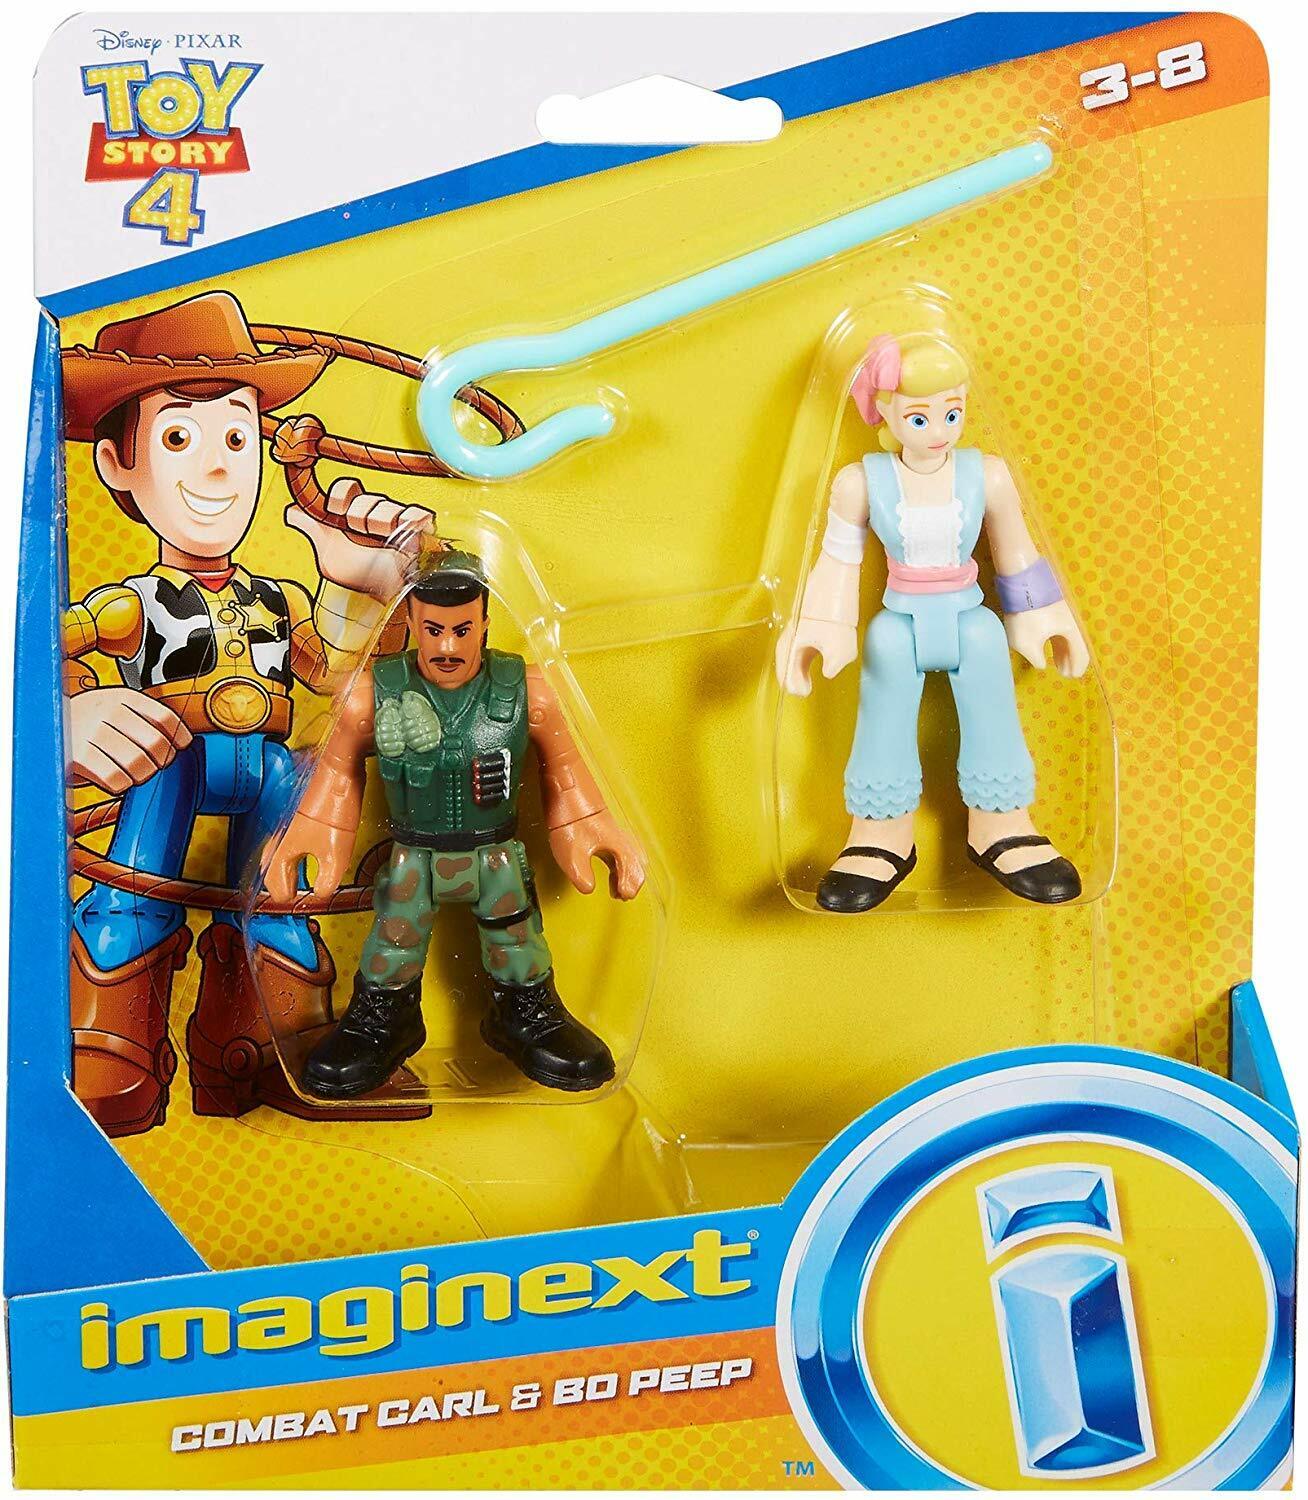 New Imaginext Toy Story 4 Combat Carl & Bo Peep Figures